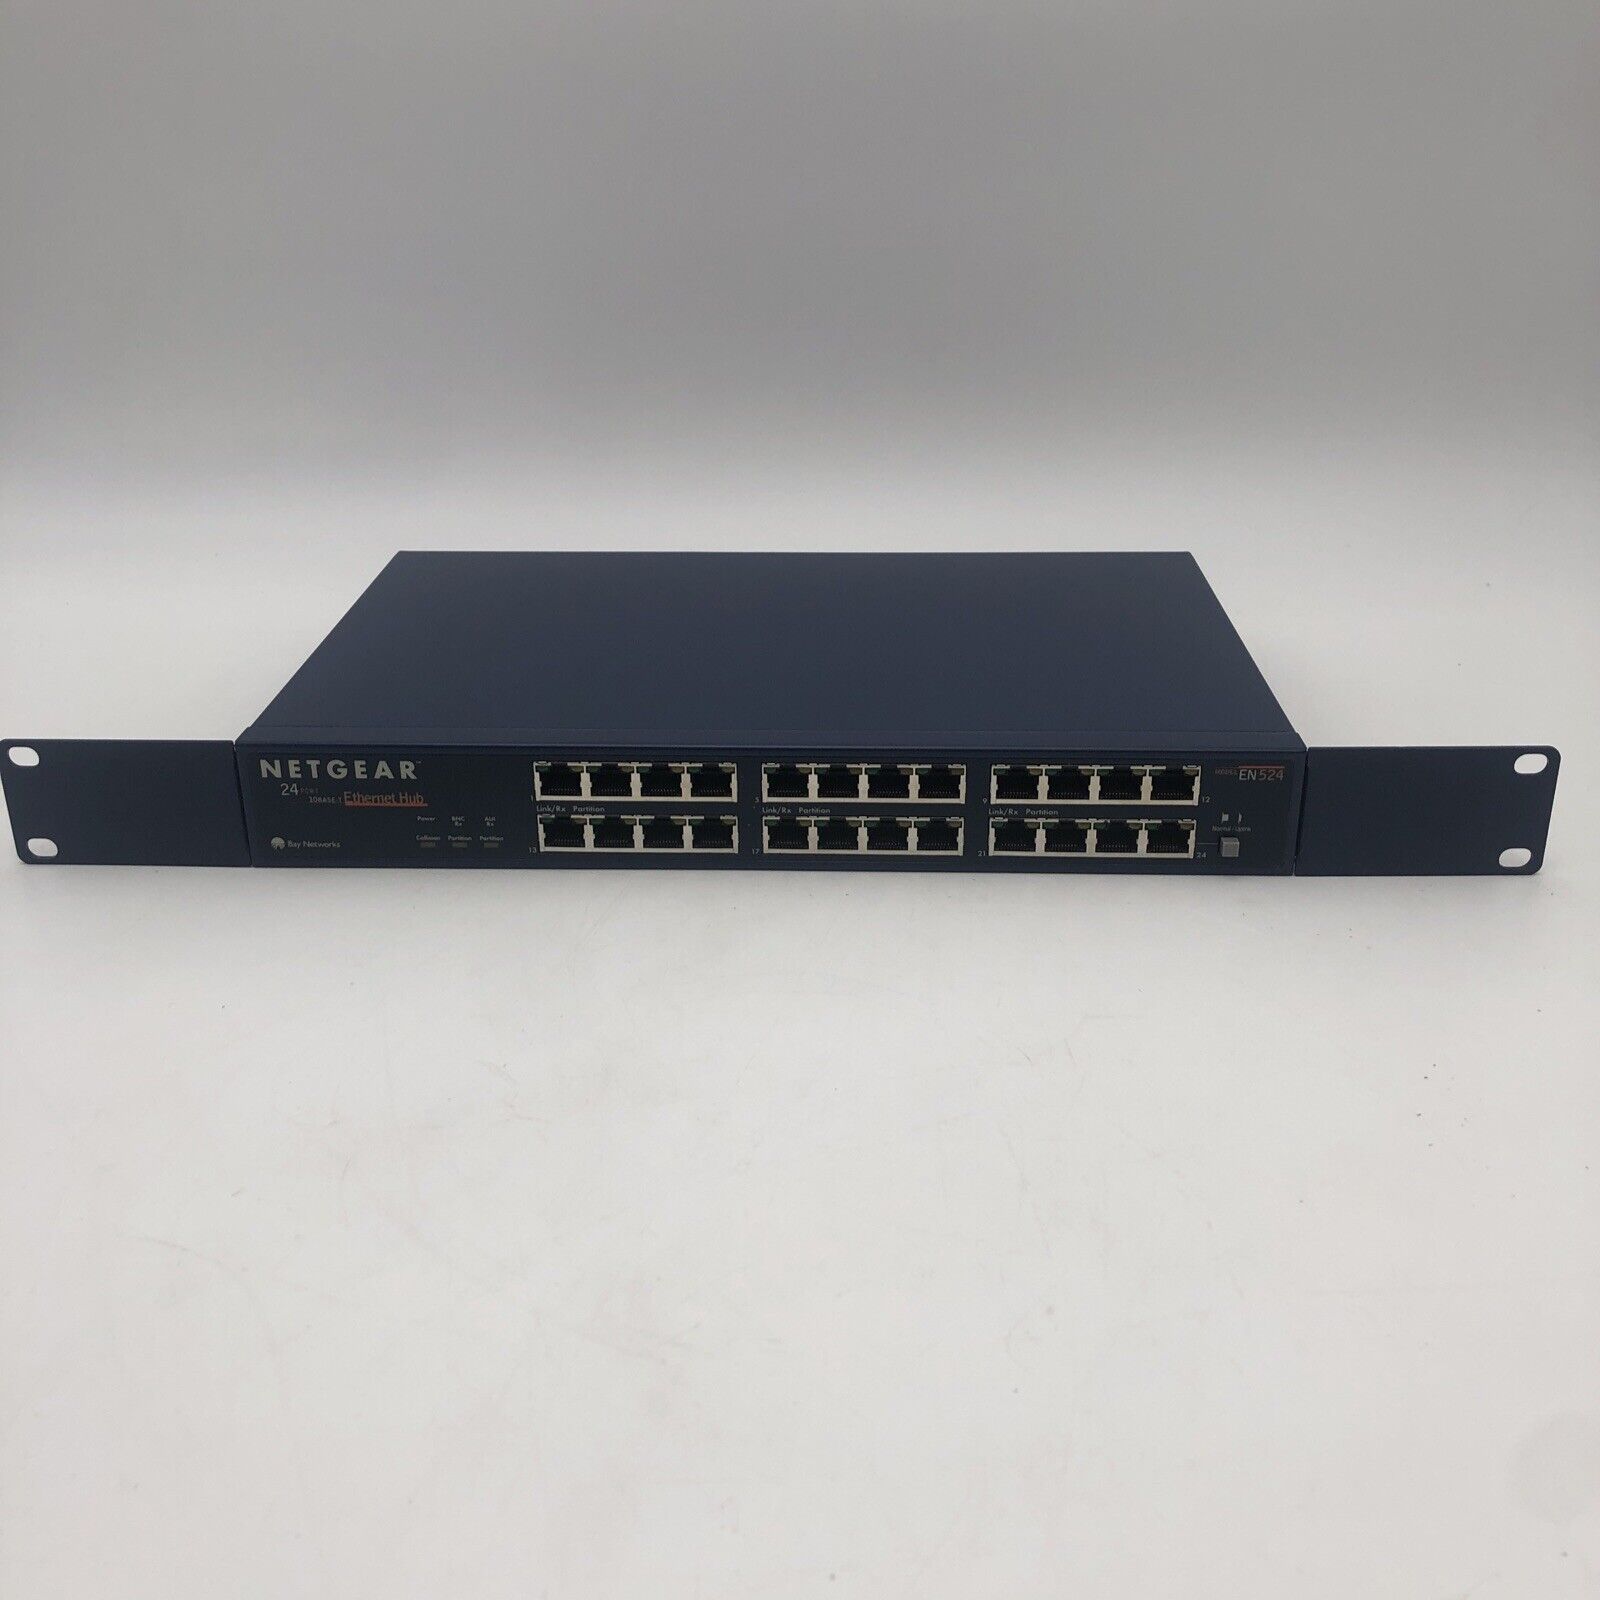 Netgear EN524 24 port Ethernet Hub POWER TESTED READ